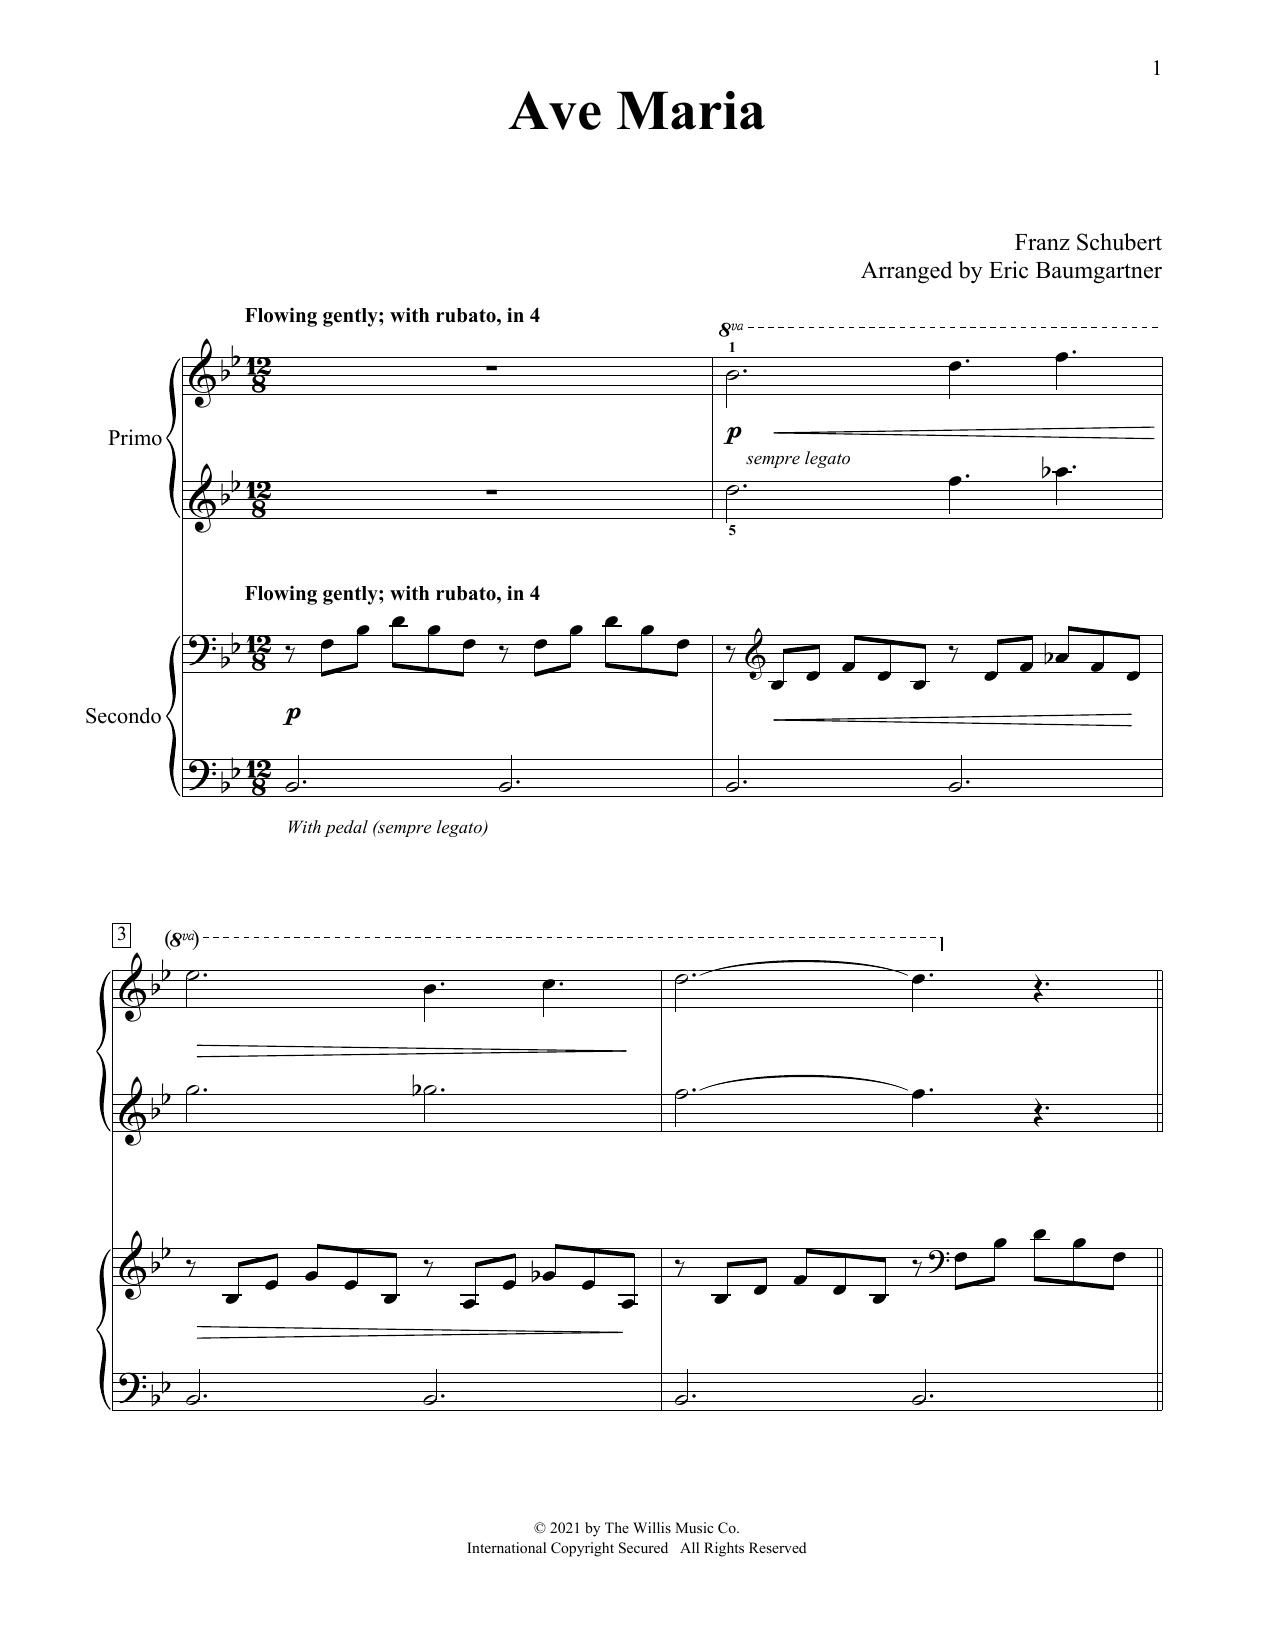 Franz Schubert Ave Maria (arr. Eric Baumgartner) sheet music notes and chords arranged for Piano Duet